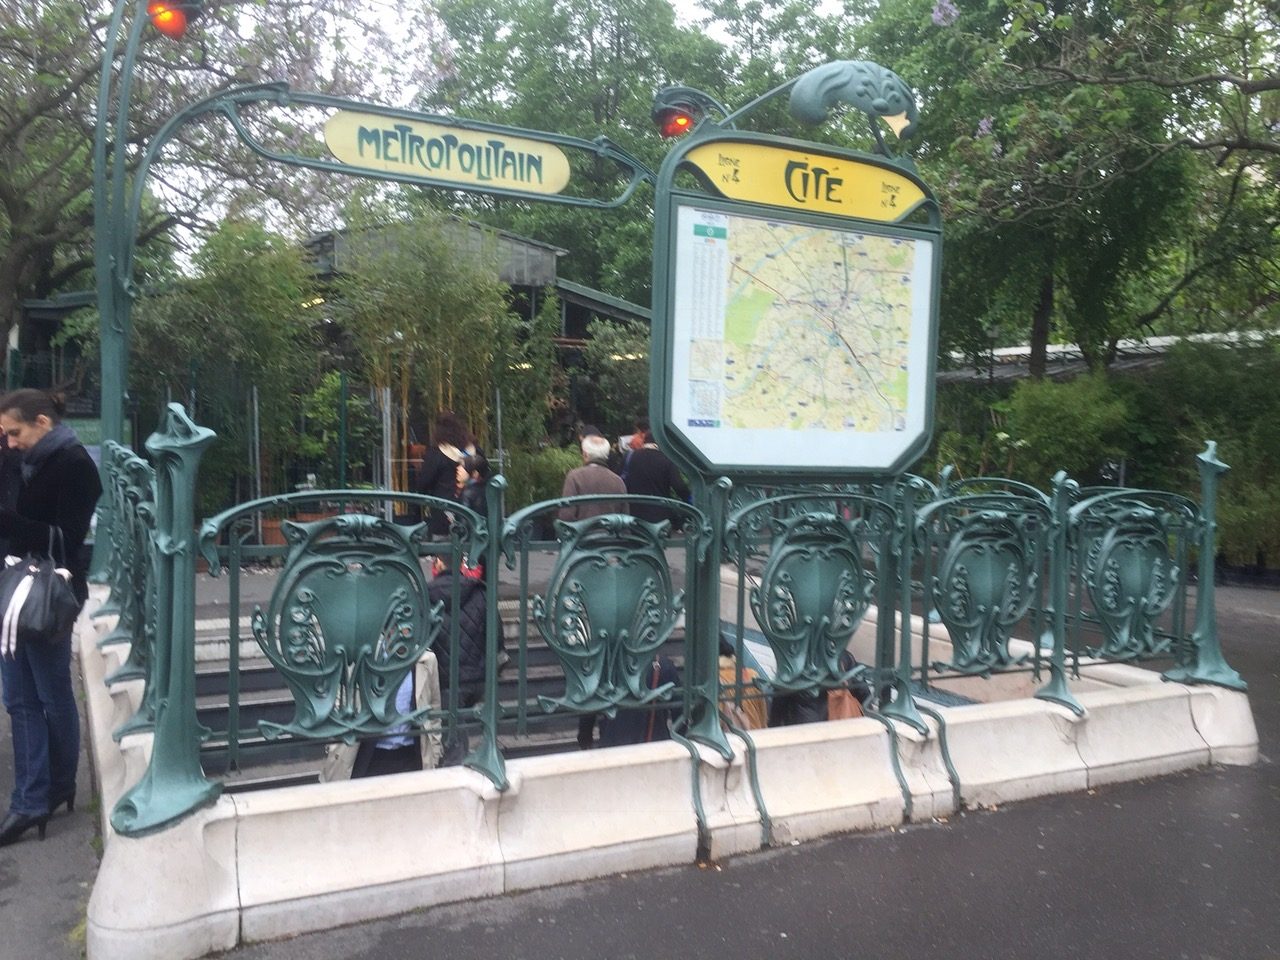 Paris: Cite Metro Station near Notre Dame